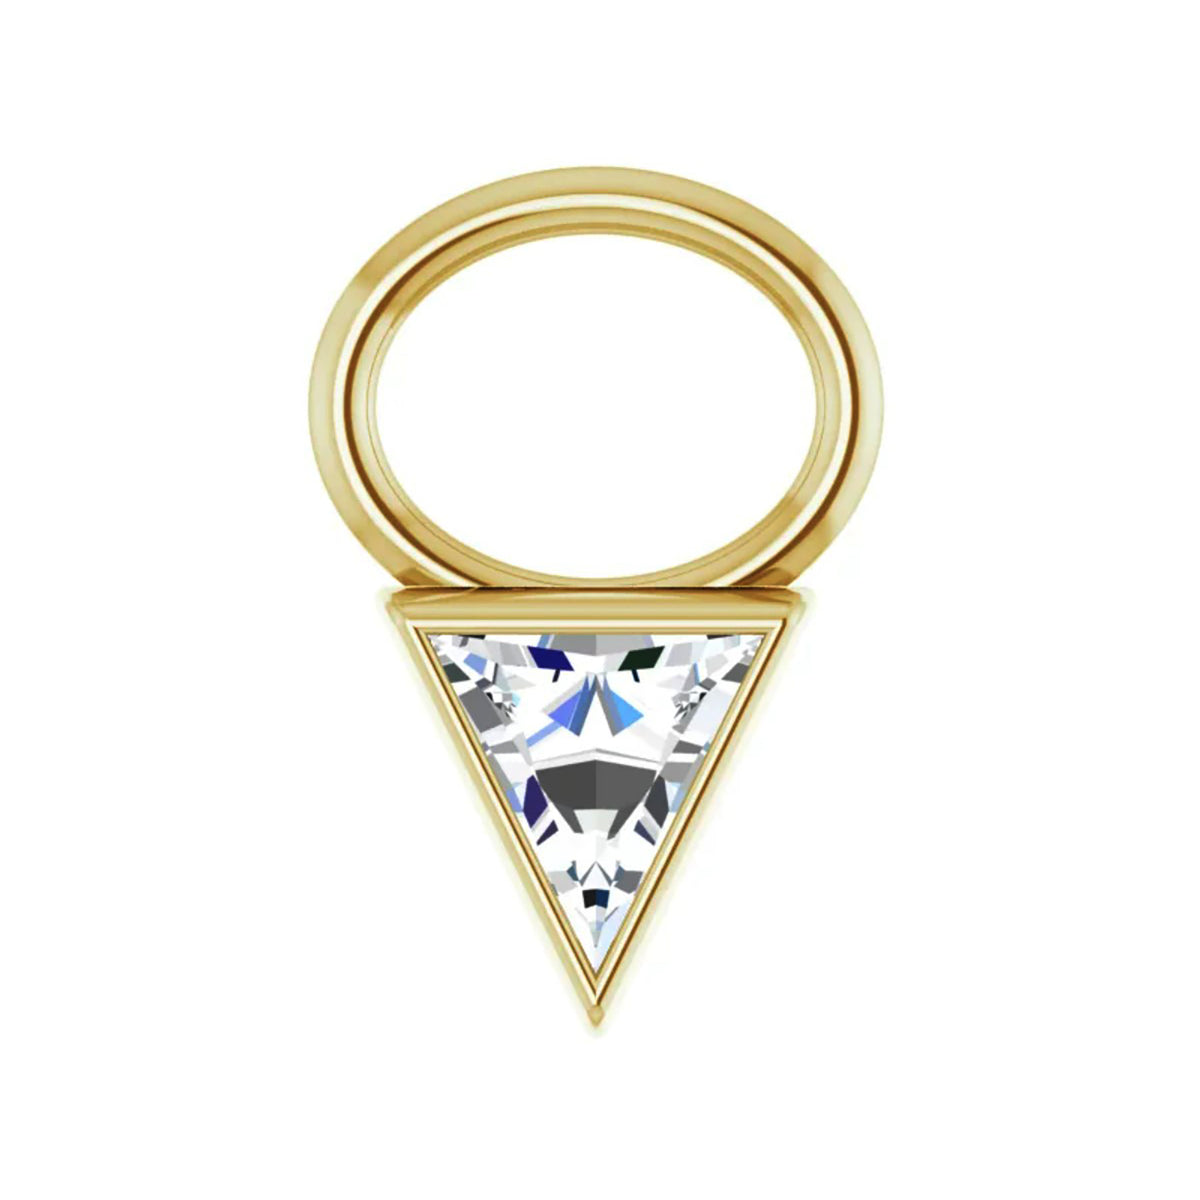 Petite Bezel Charm Necklace | Triangle Diamond